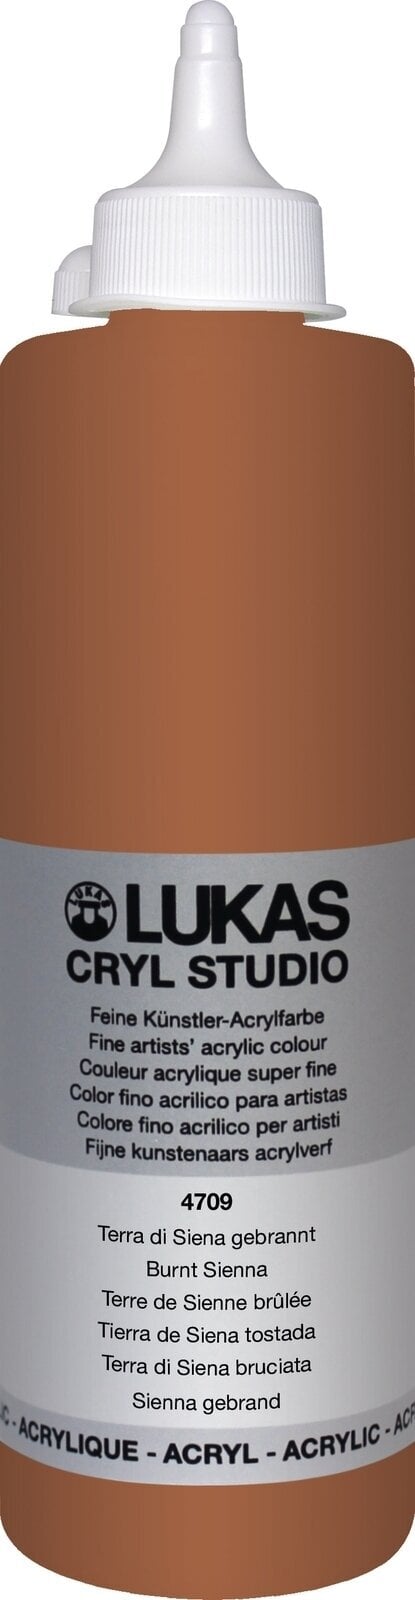 Colore acrilico Lukas Cryl Studio Acrylic Paint Plastic Bottle Colori acrilici Burnt Sienna 500 ml 1 pz